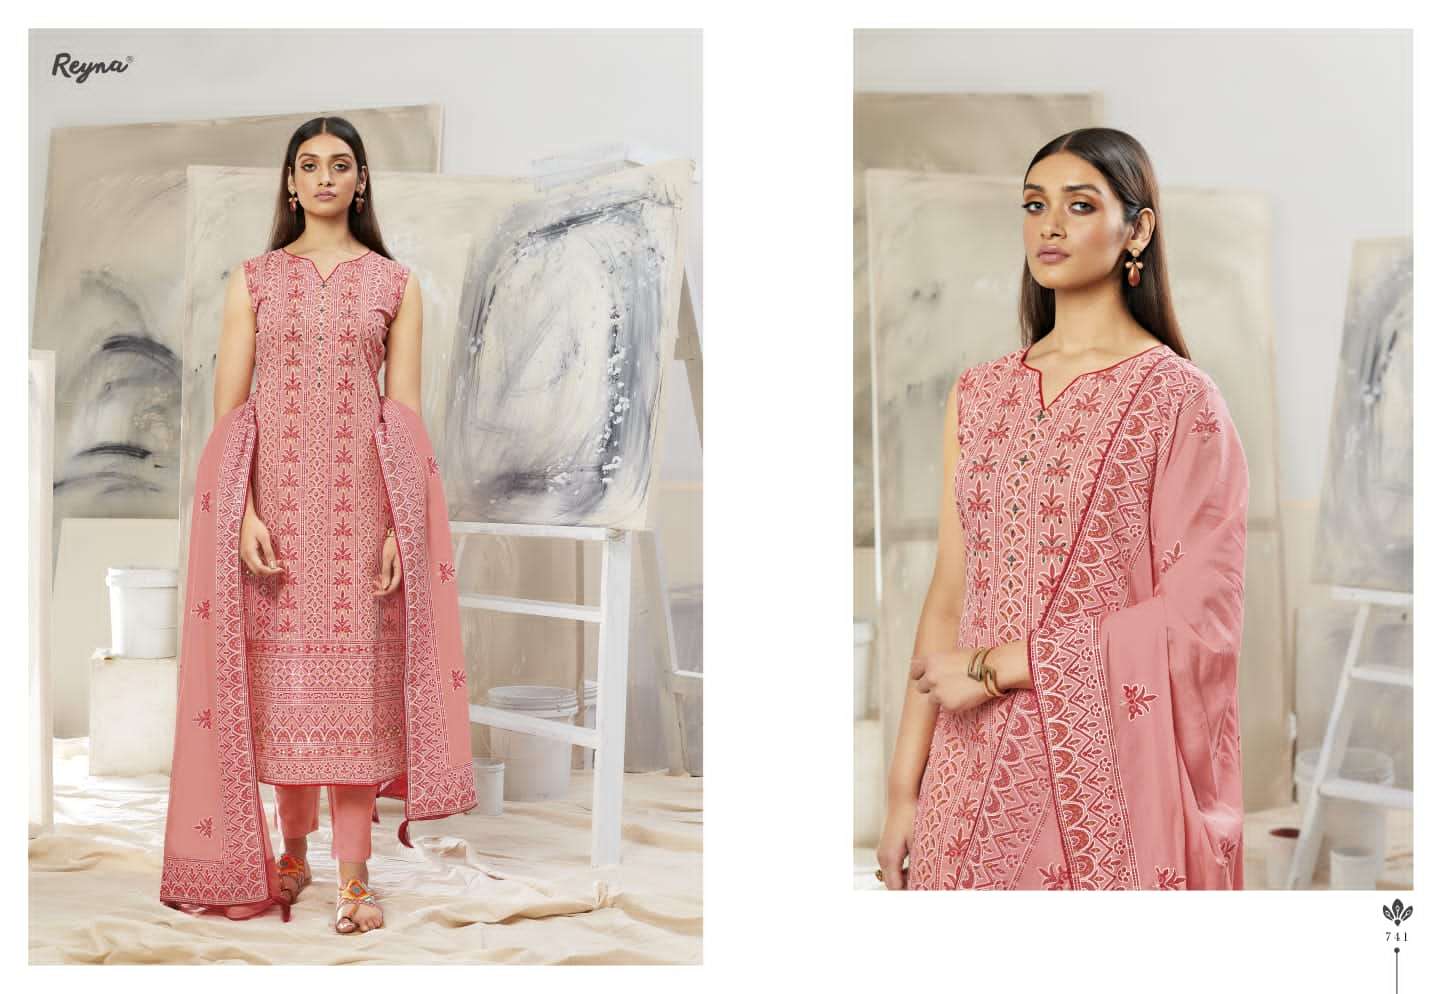 reyna lucknowi vol 22 741-746 series exclusive designer salwar kameez manufacturer surat